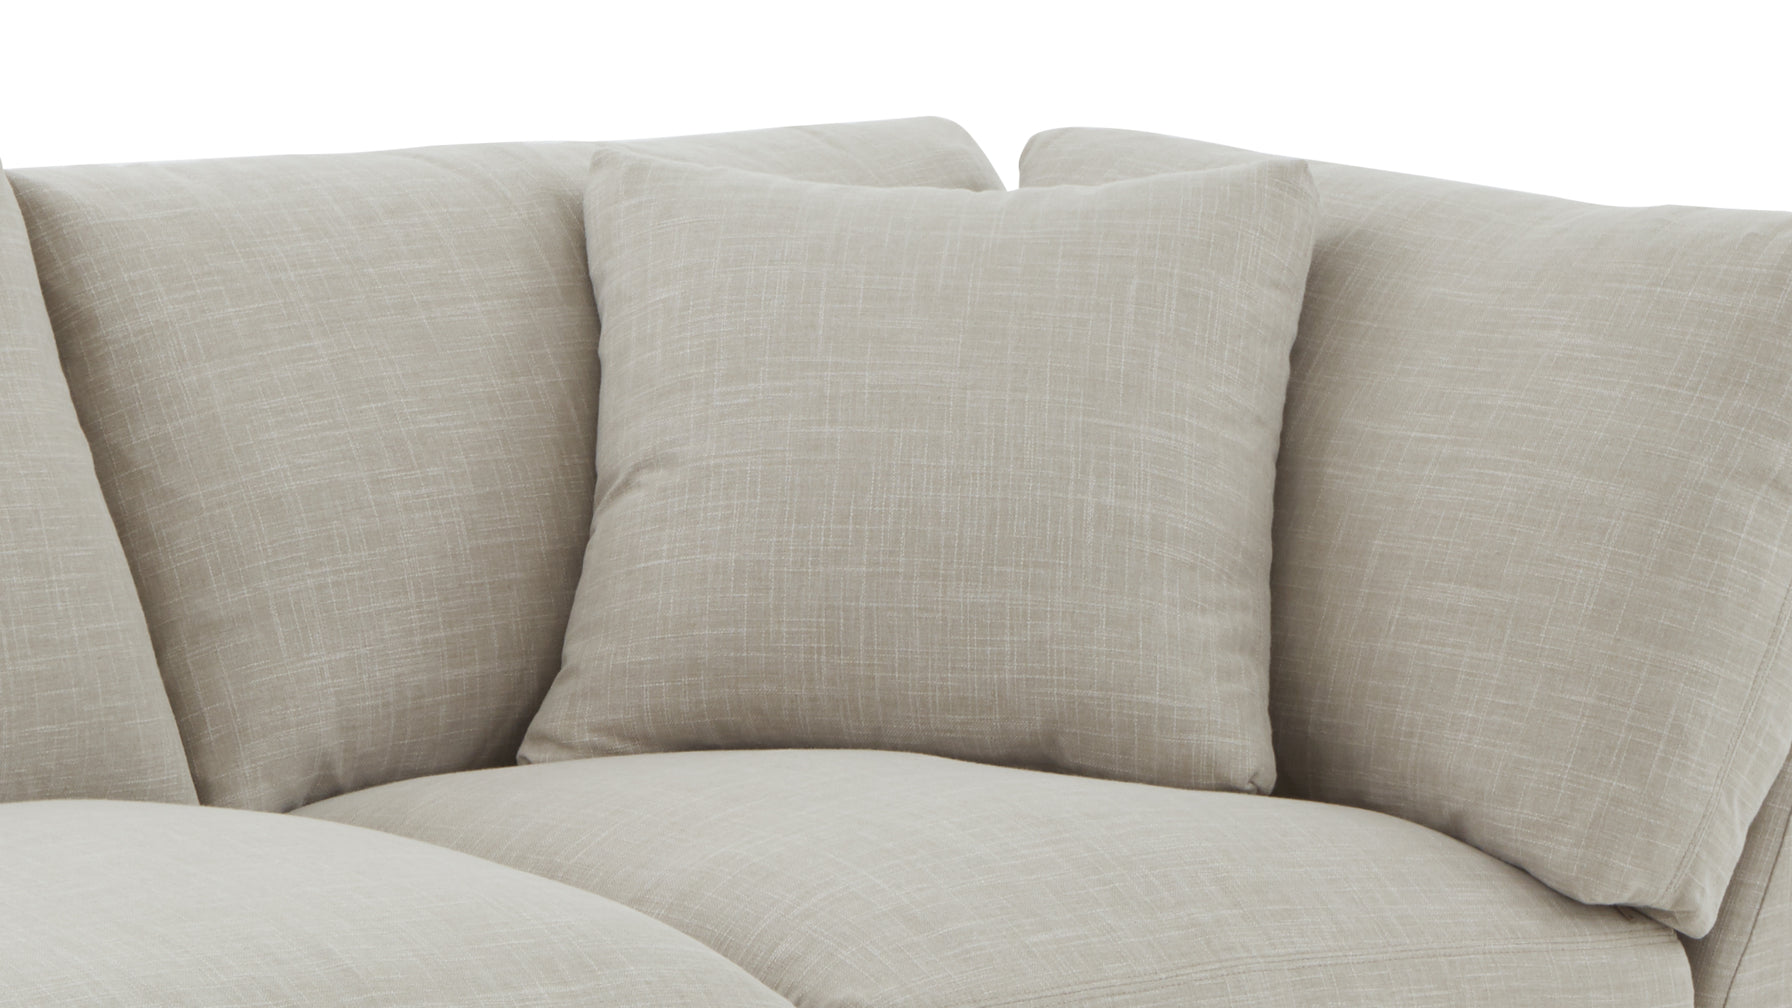 Get Together™ 2-Piece Modular Sofa, Standard, Light Pebble - Image 10